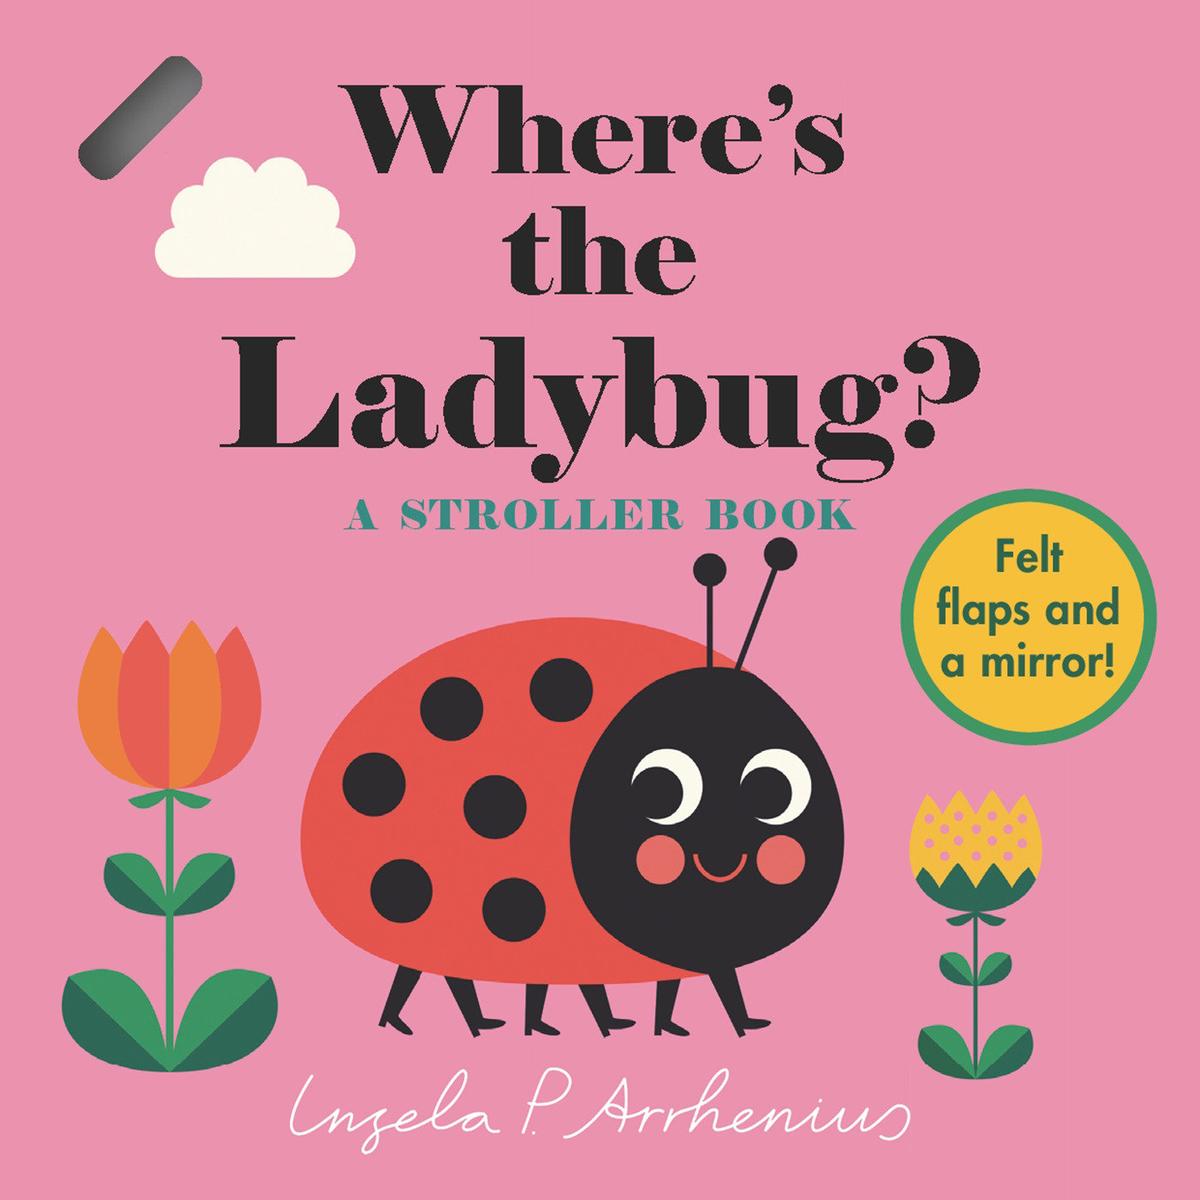 Where's the Ladybug? - A Stroller Book